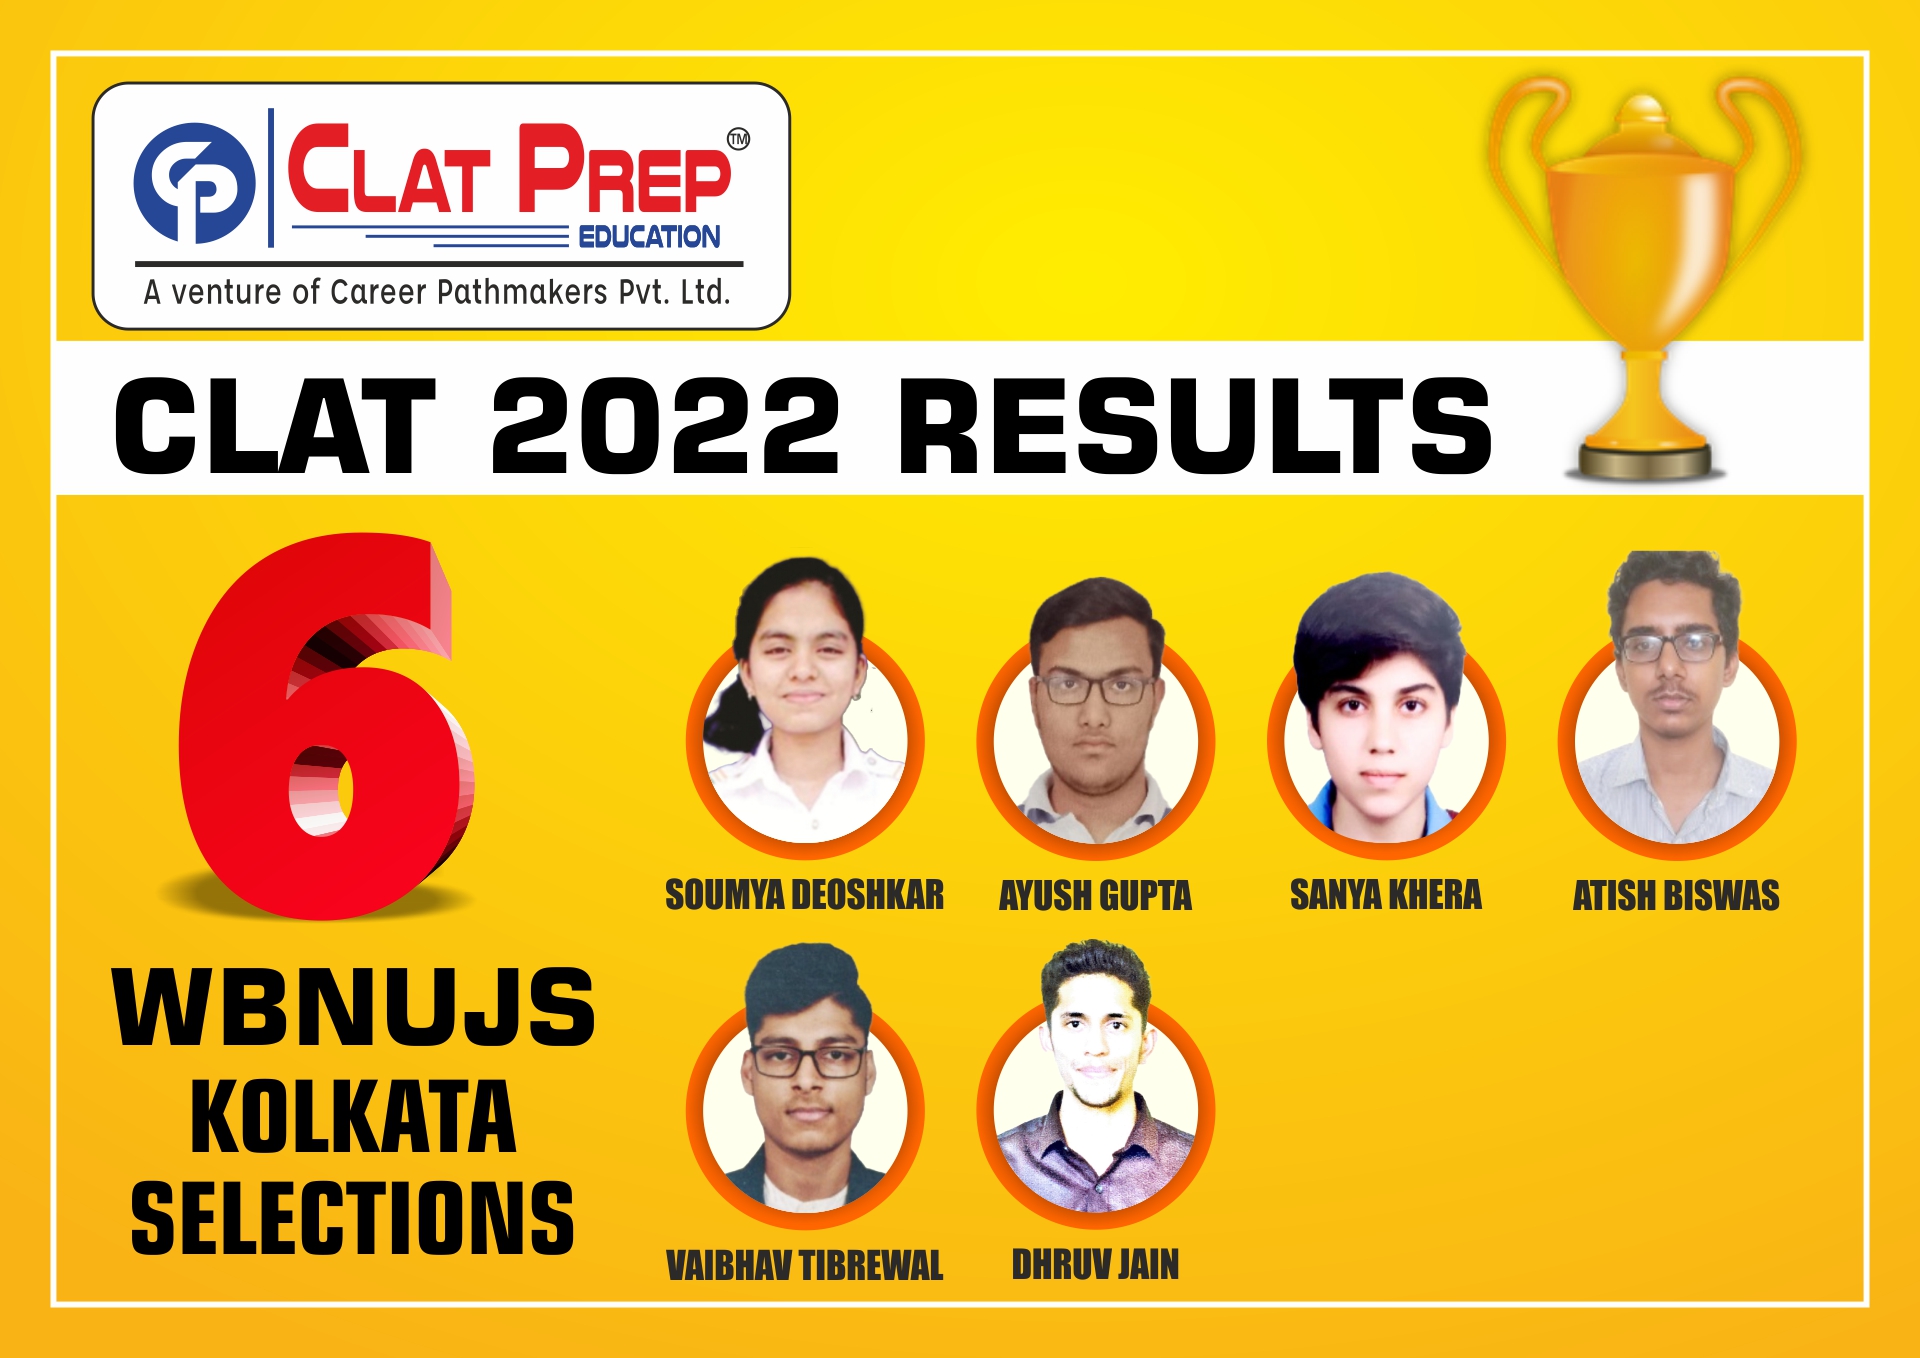 NLU Kolkata Selections in CLAT 2022